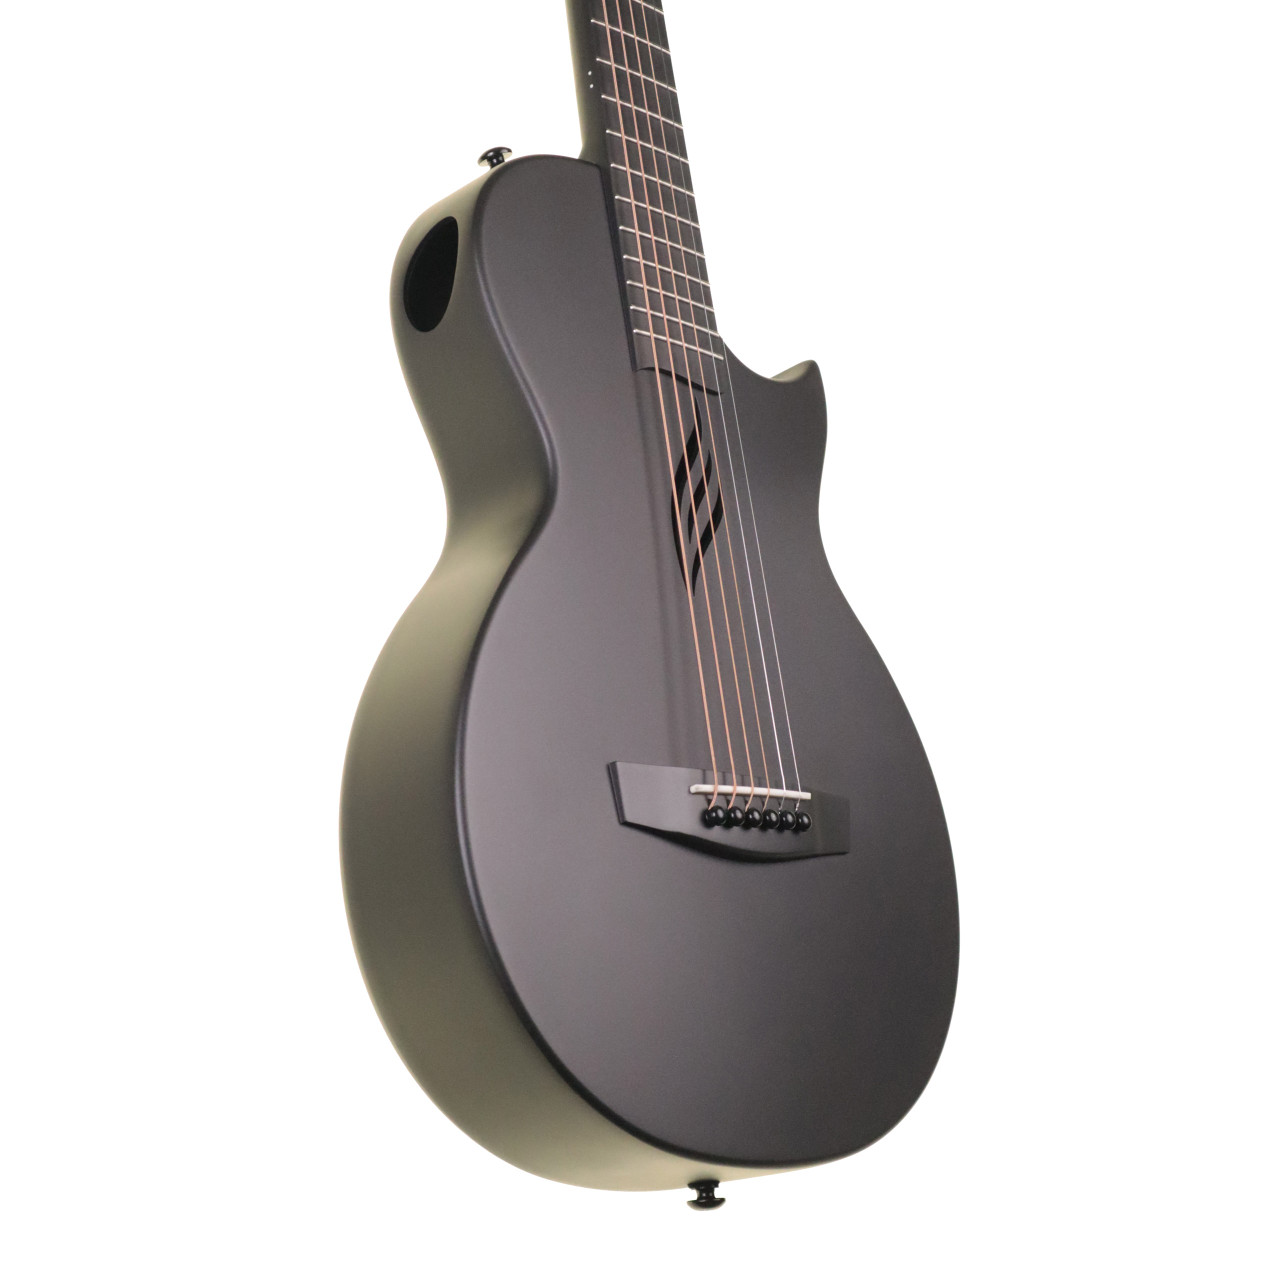 Enya Nova Go Carbon Fibre Acoustic Guitar, Black - Absolute Music